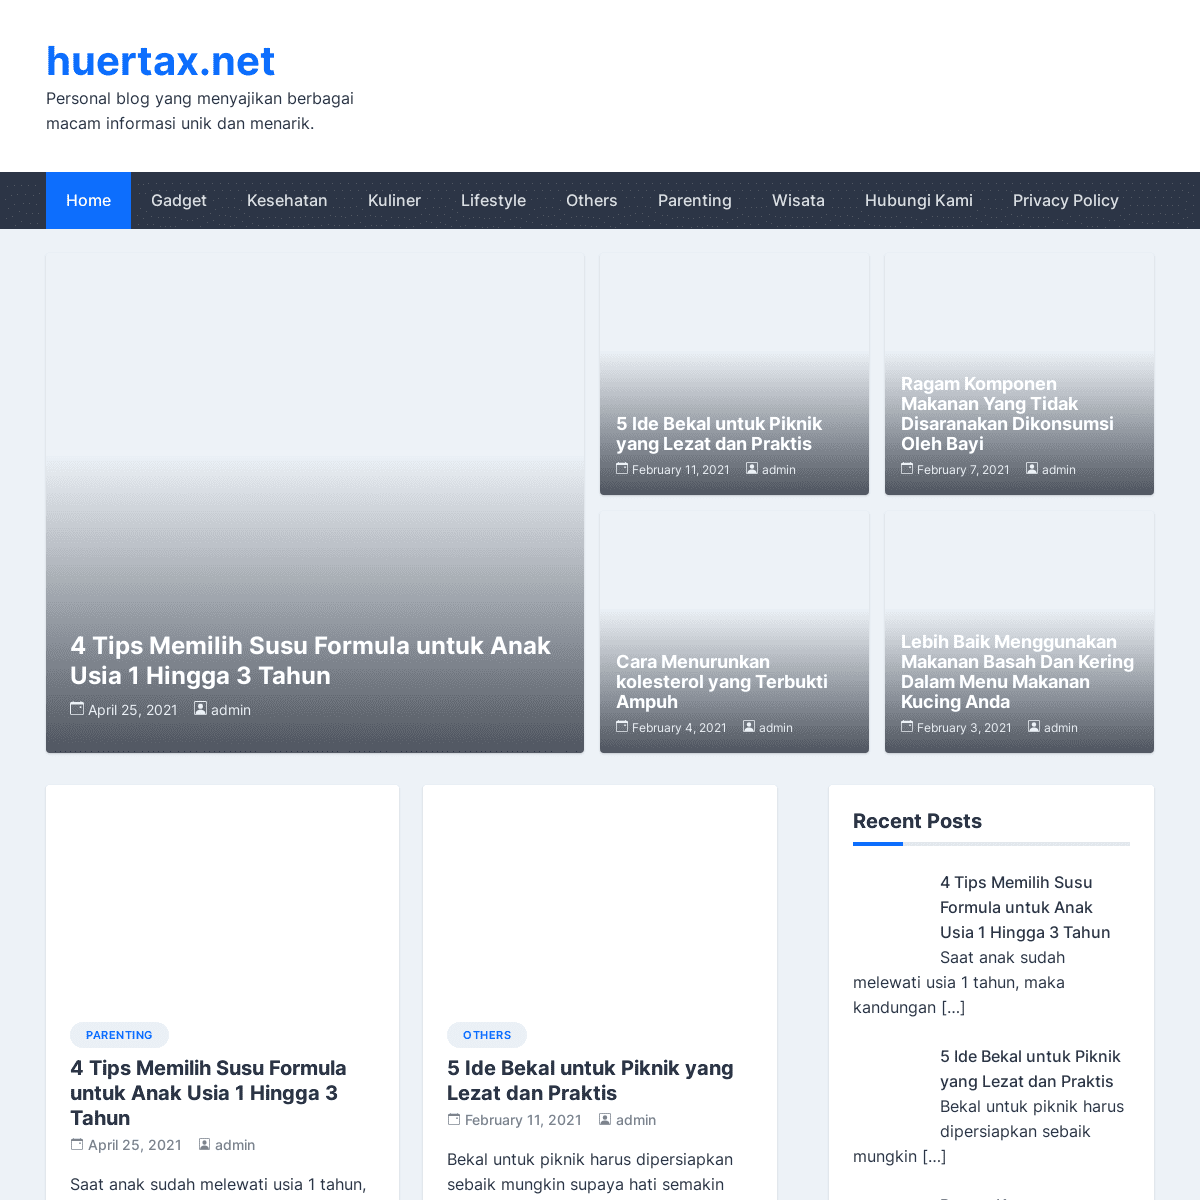 A complete backup of https://huertax.net